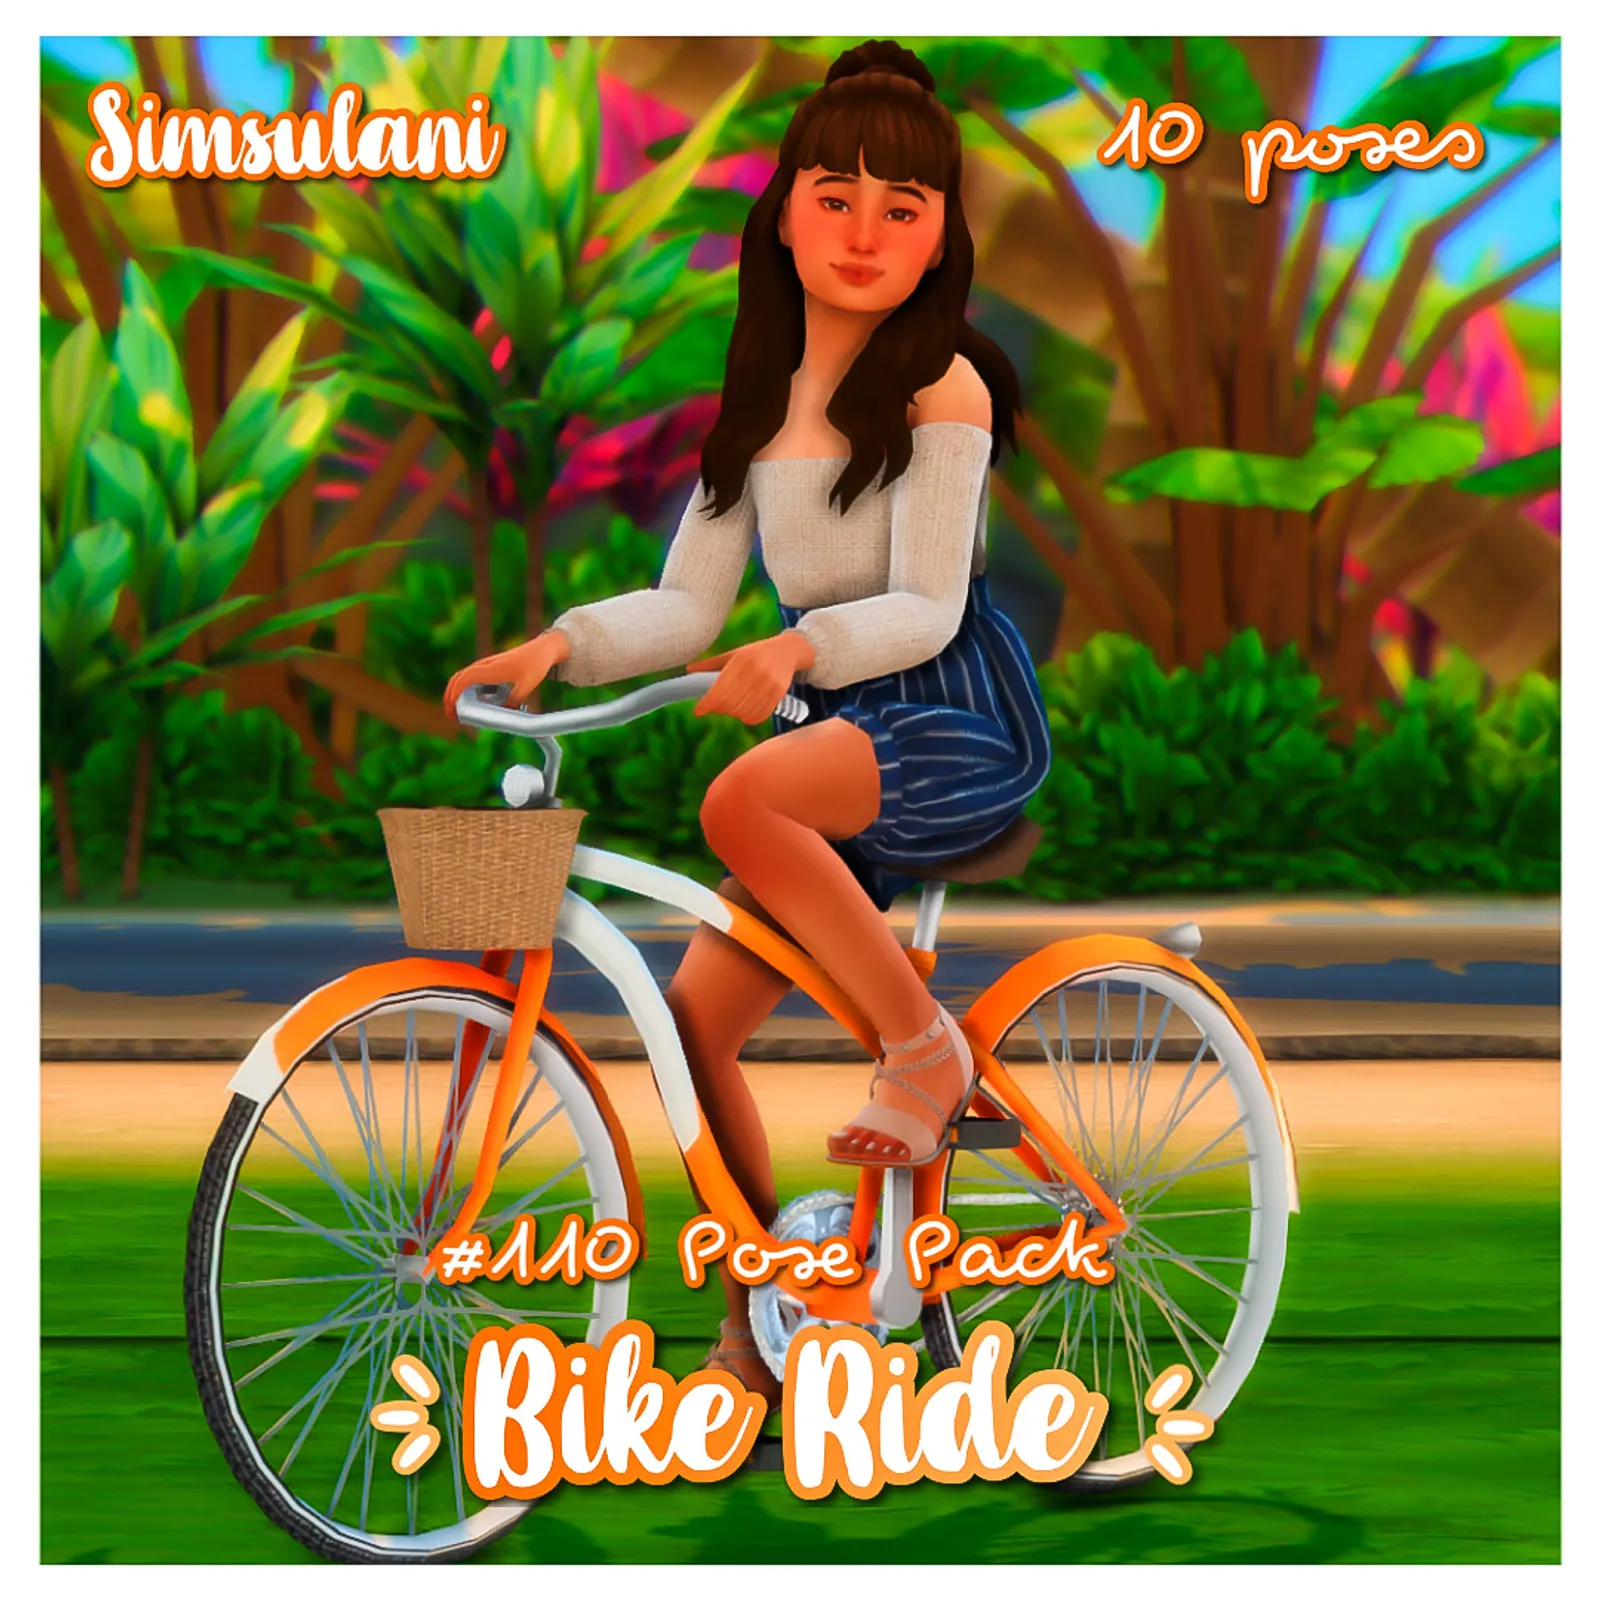 #110 Pose Pack : Bike Ride - Children